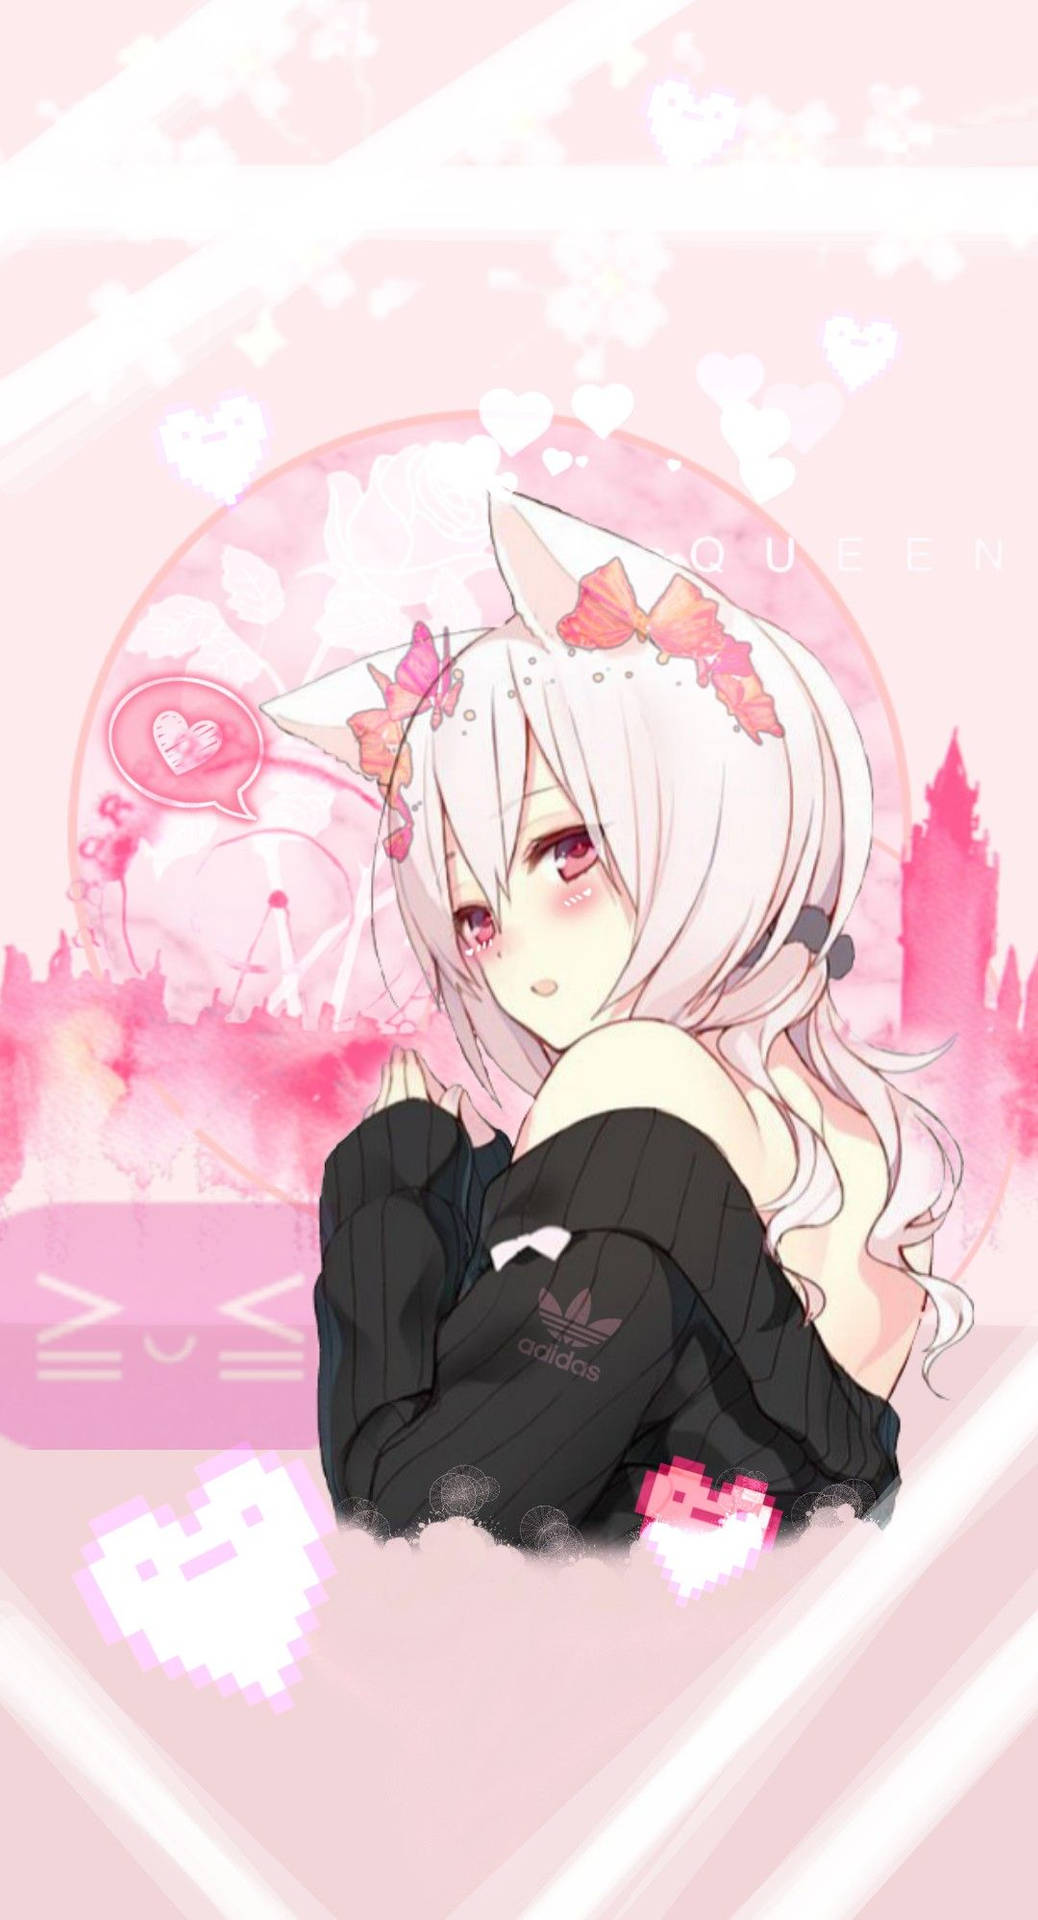 Aesthetic Anime Girl On Dreamy Pink PFP Wallpaper